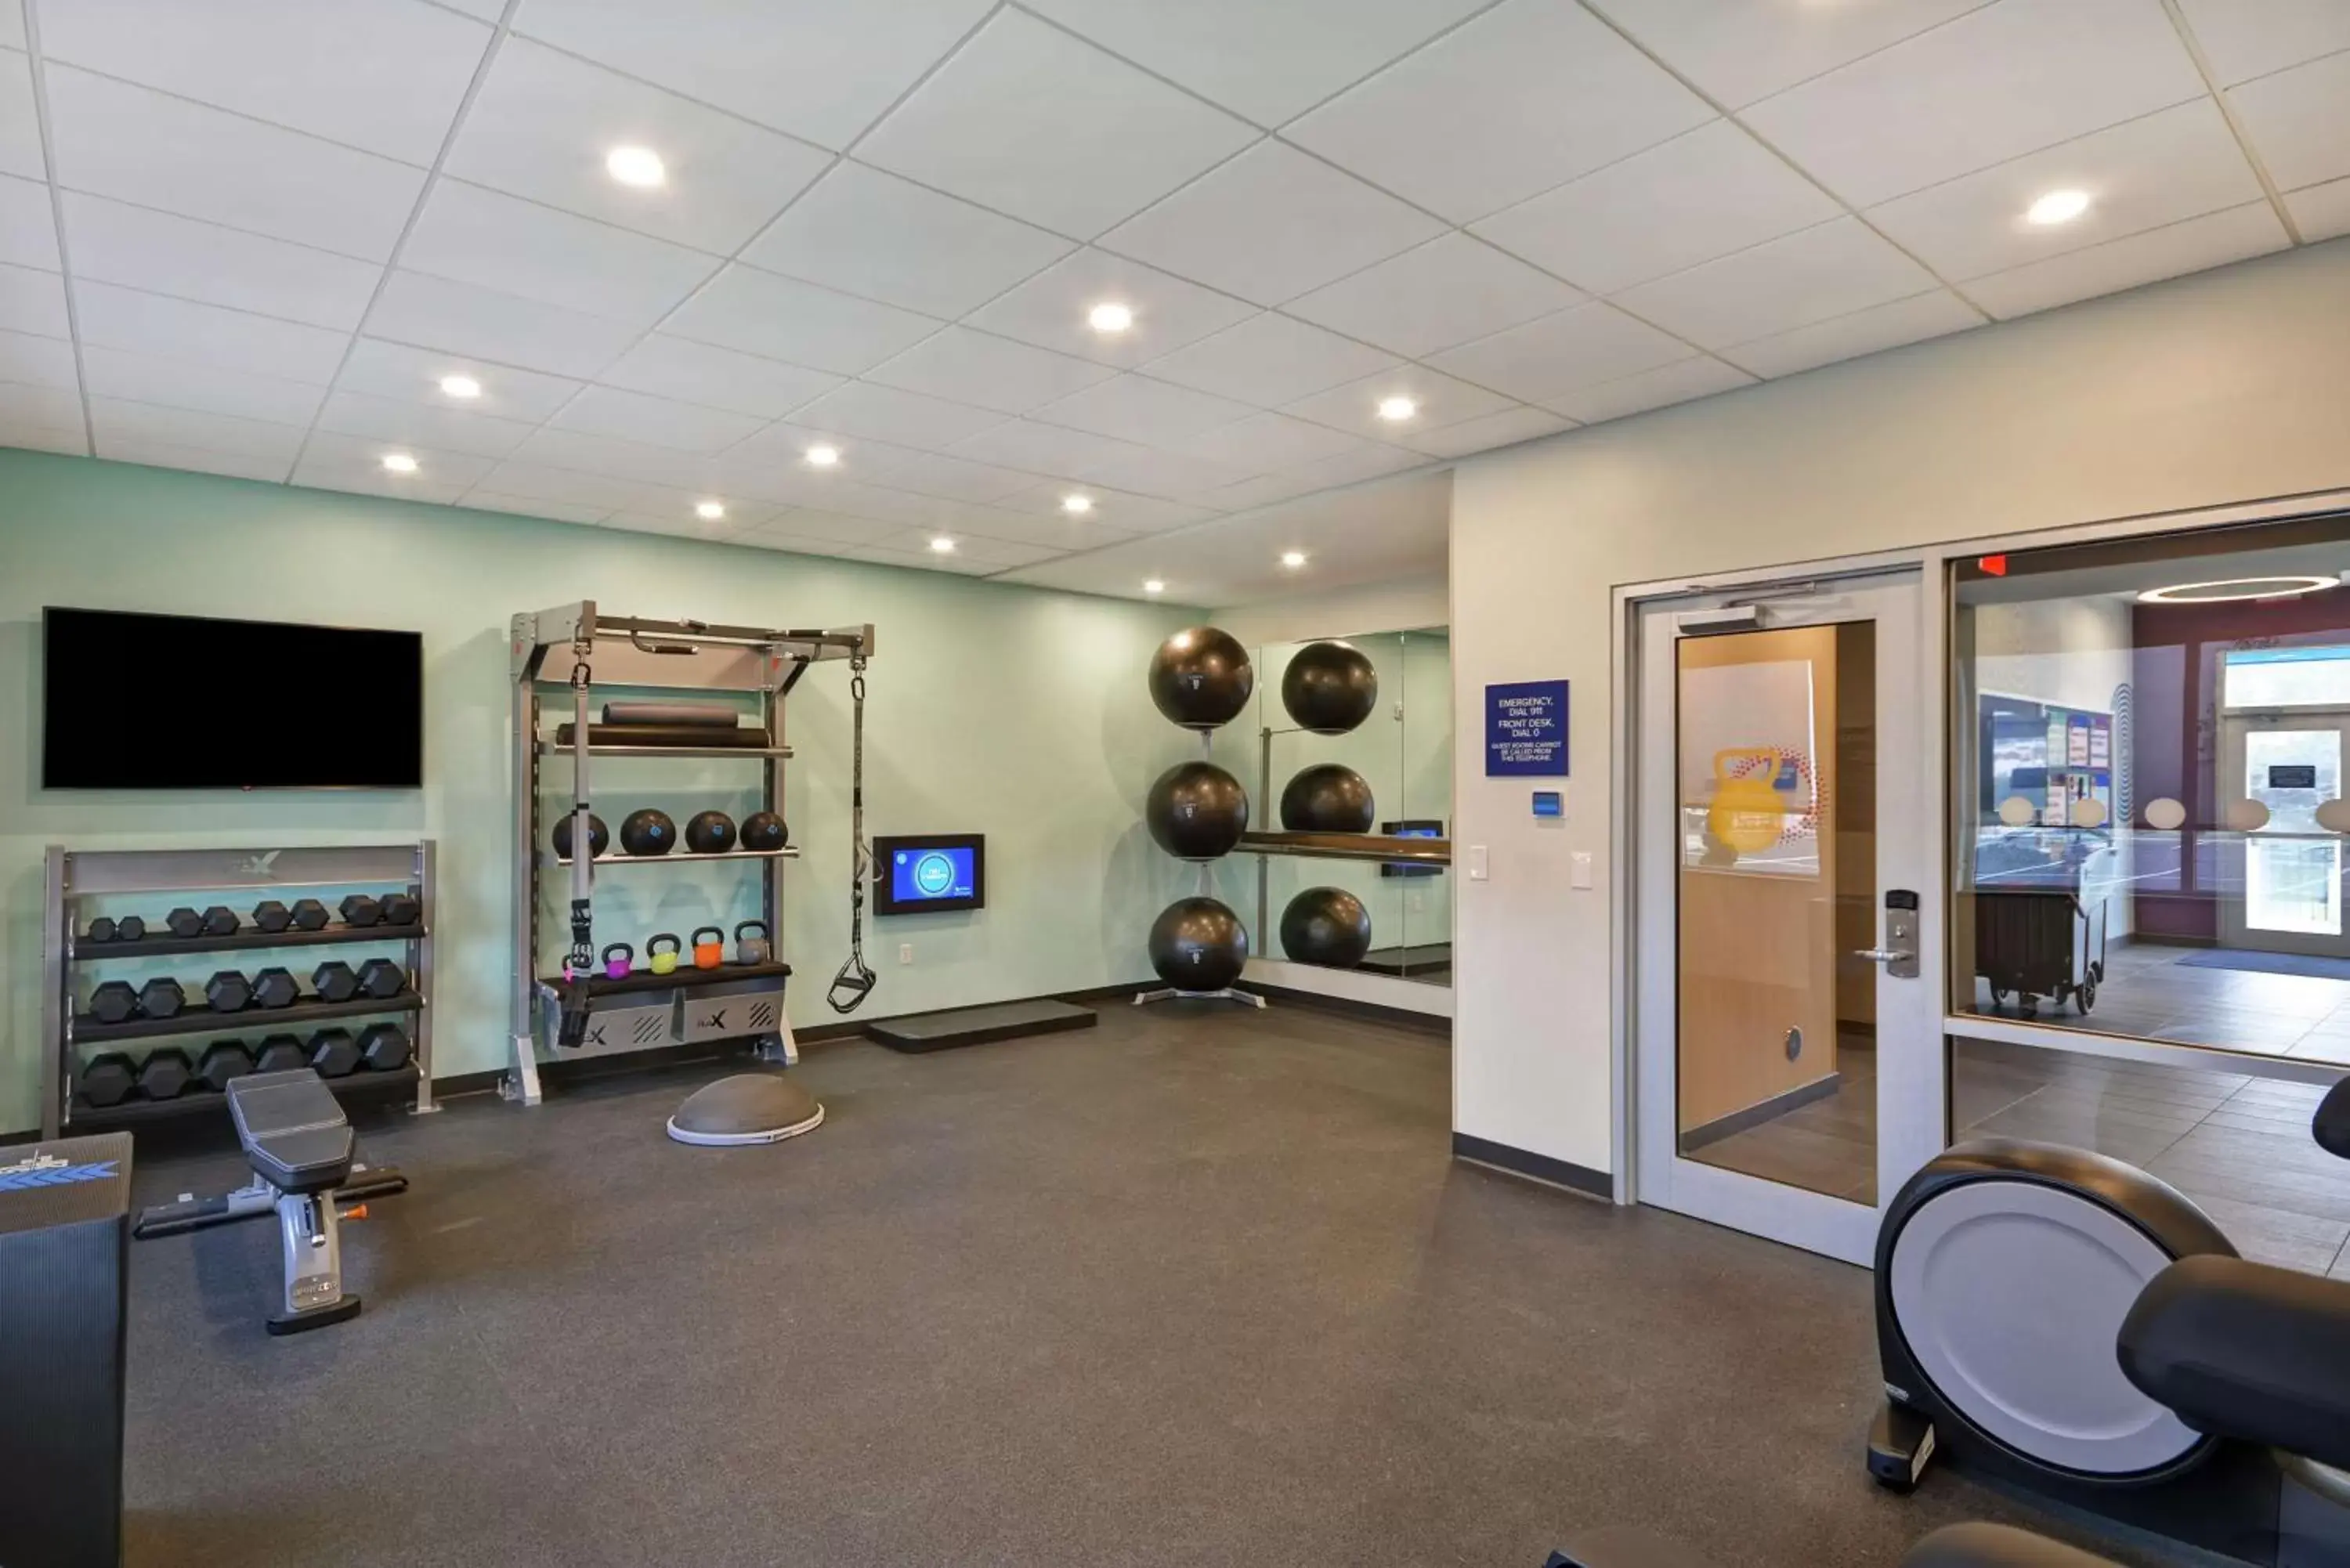 Fitness centre/facilities, Fitness Center/Facilities in Tru By Hilton Beavercreek Dayton